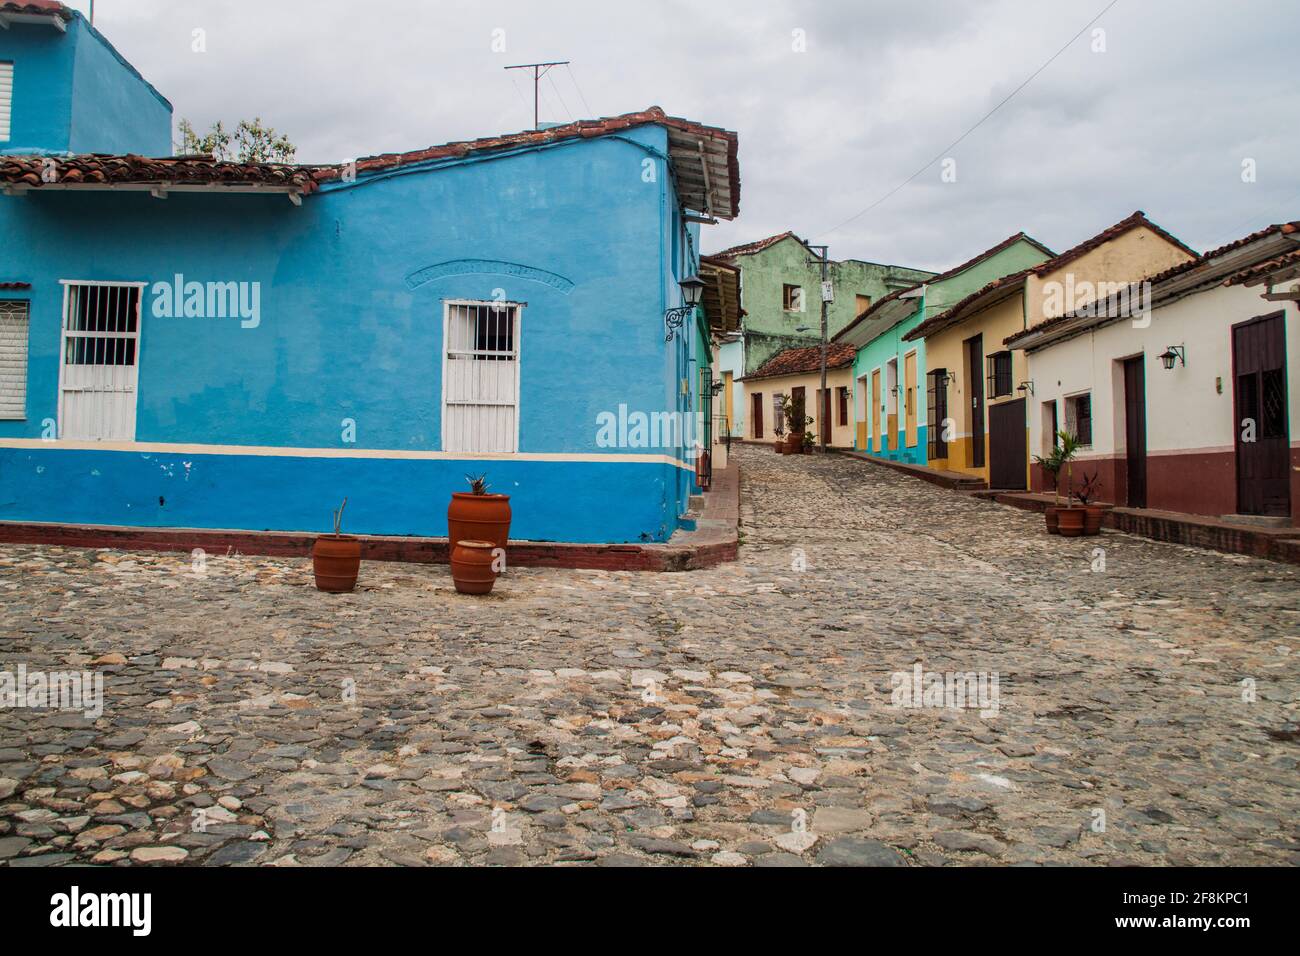 Colorful houses in Sancti Spiritus, Cuba Stock Photo